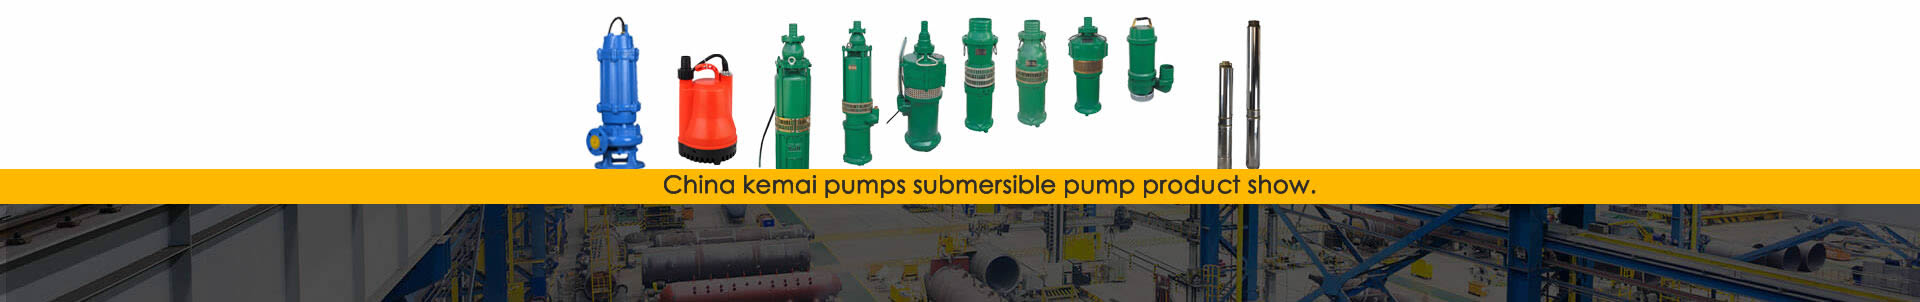 Submersible Pump Manufacturer